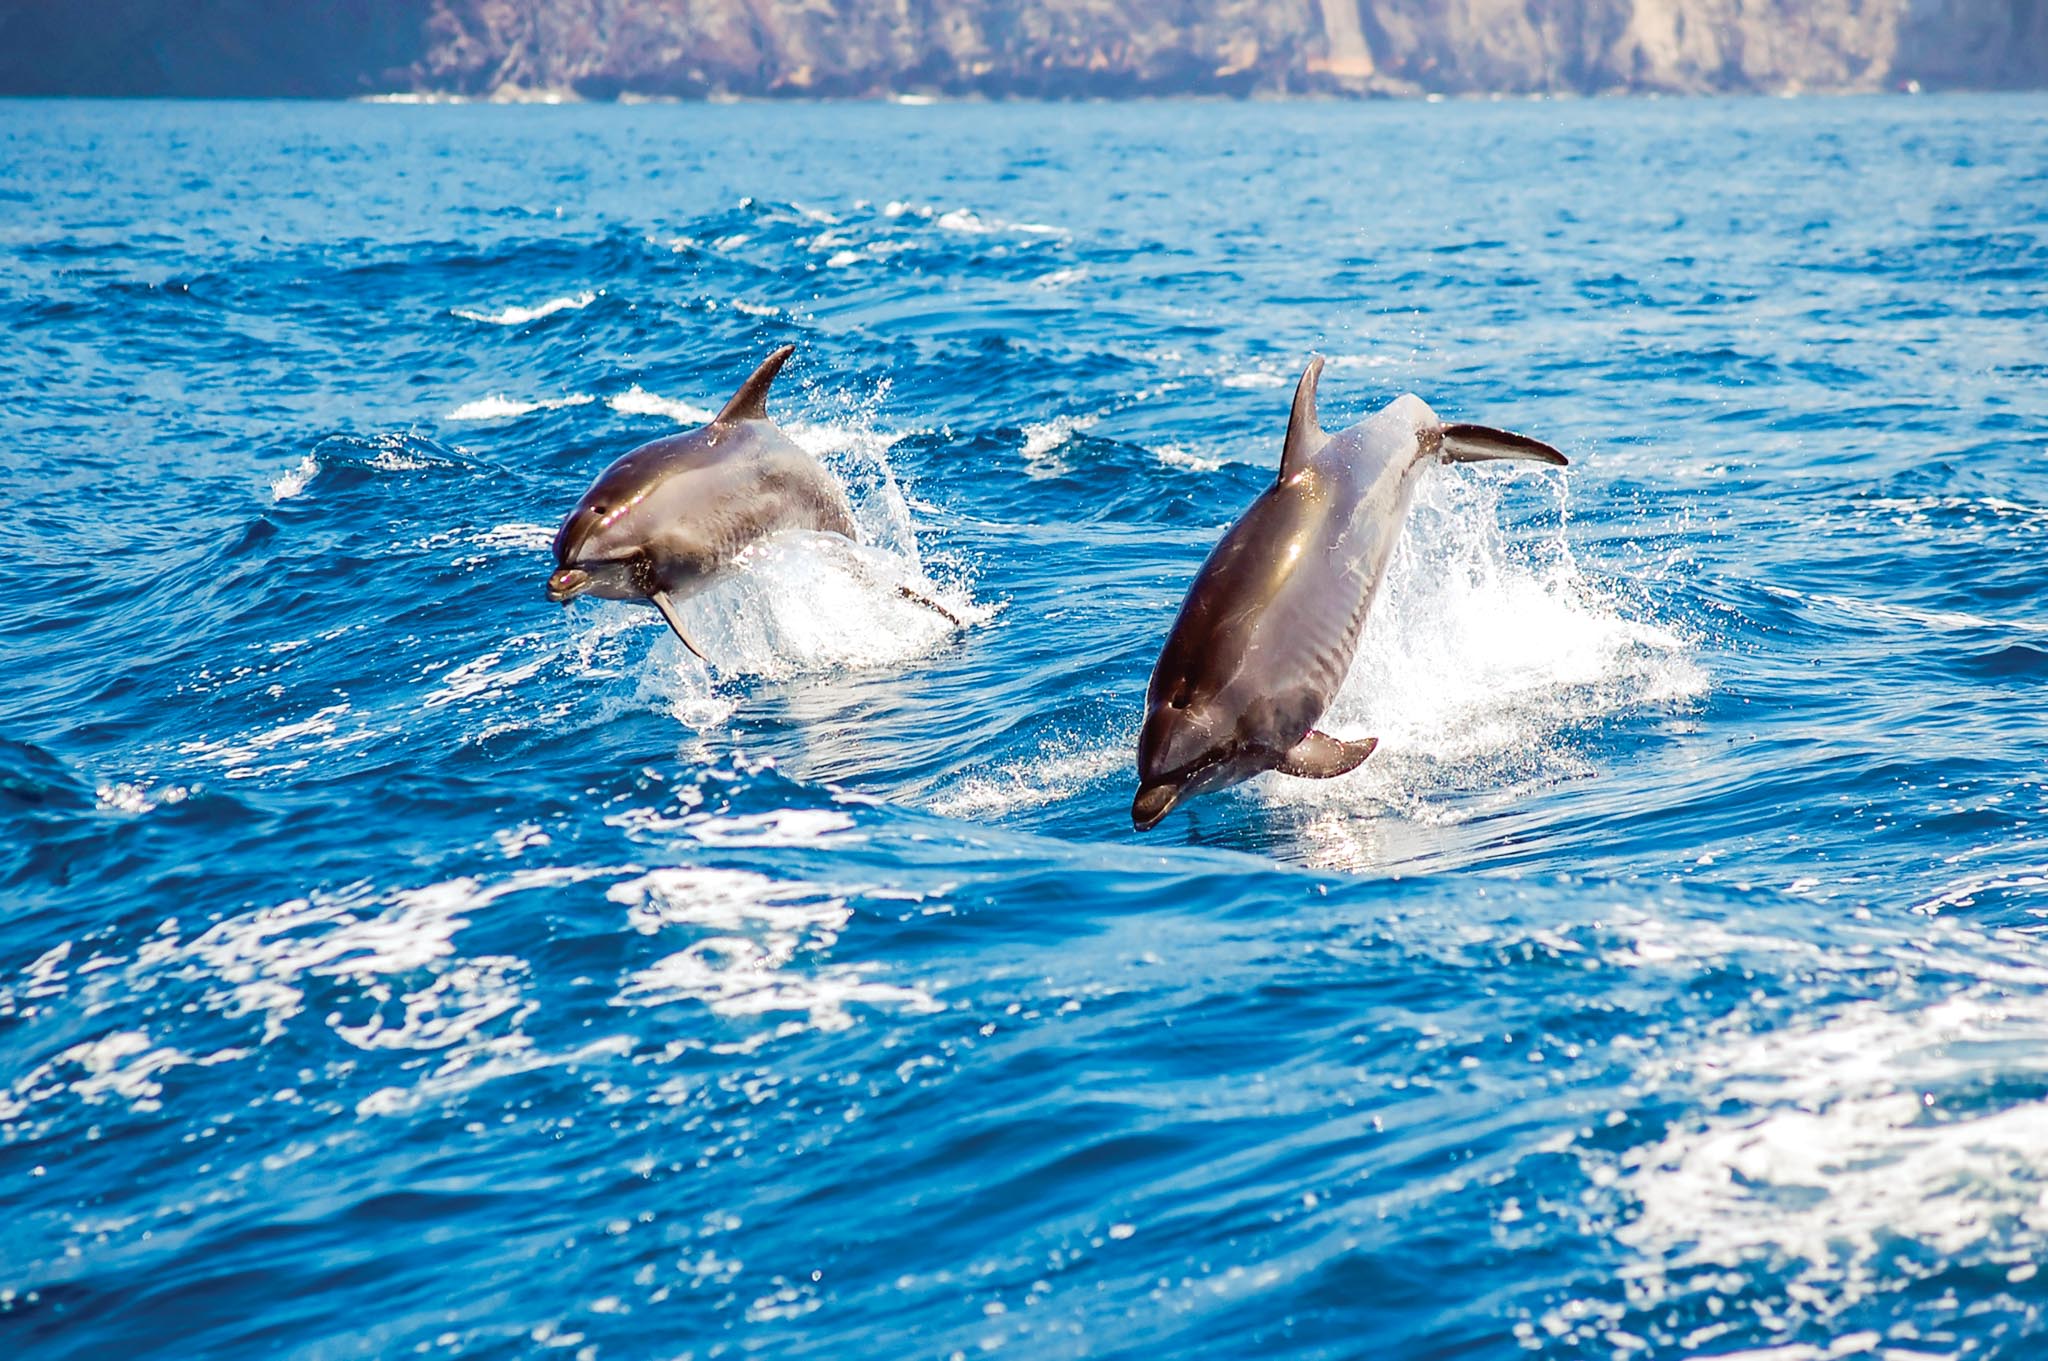 Dolphin spotting